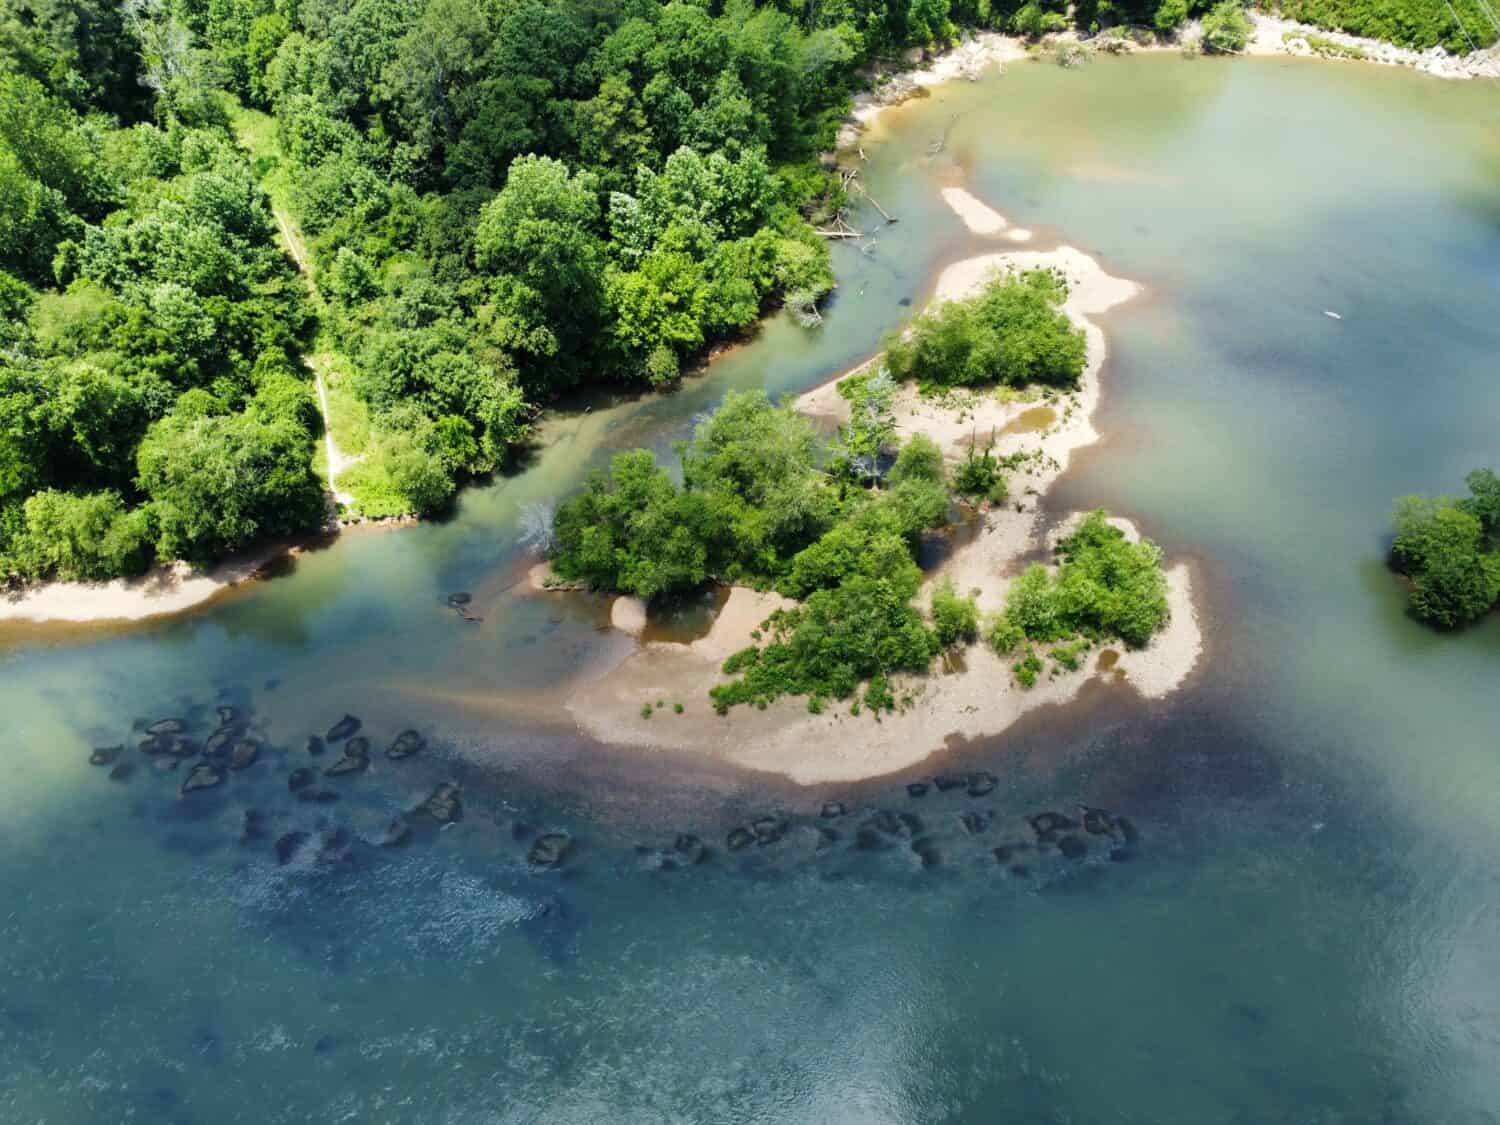 Mini island on Chattahoochee River at Morgan Falls Park, Roswell, Georgia.